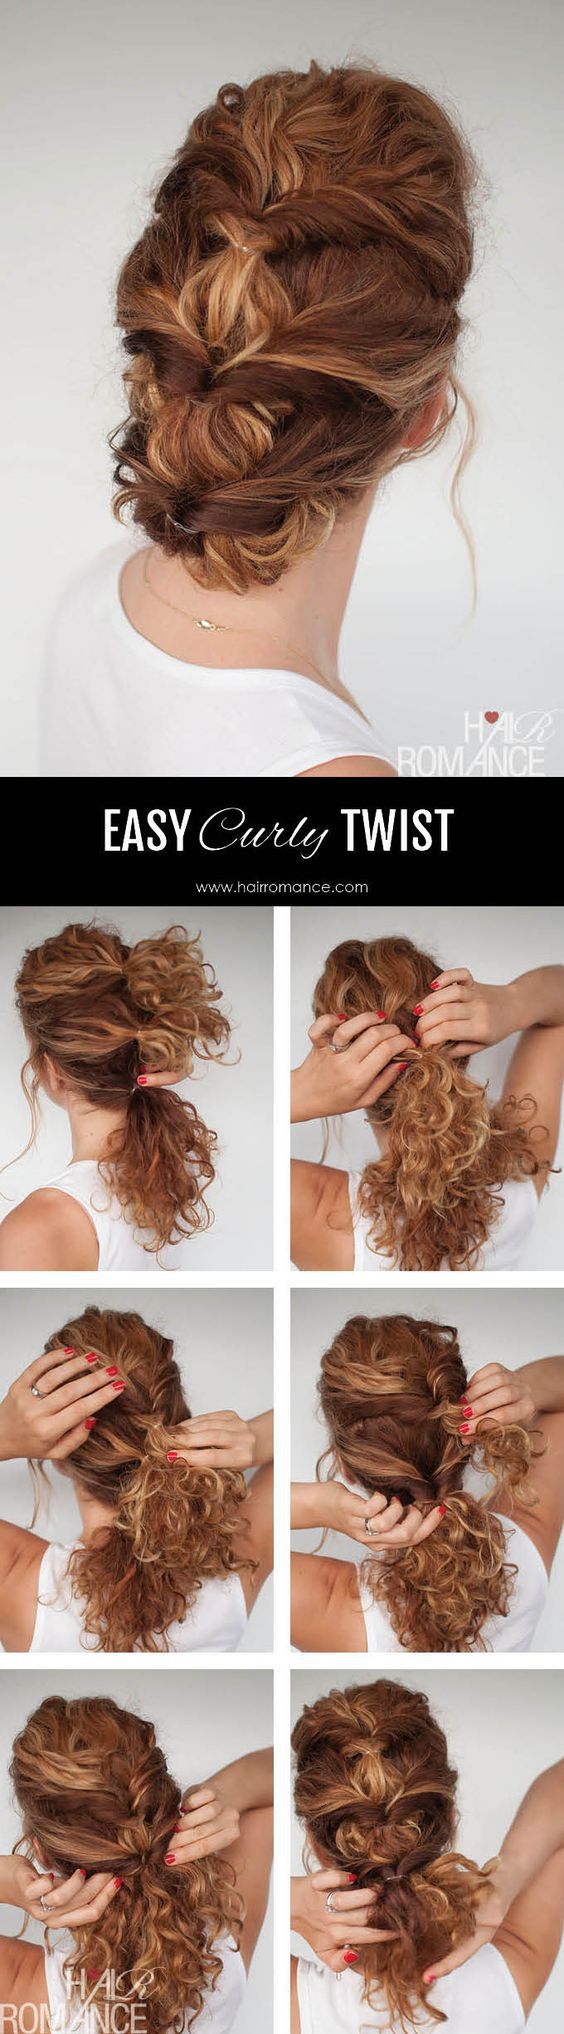 curly twist